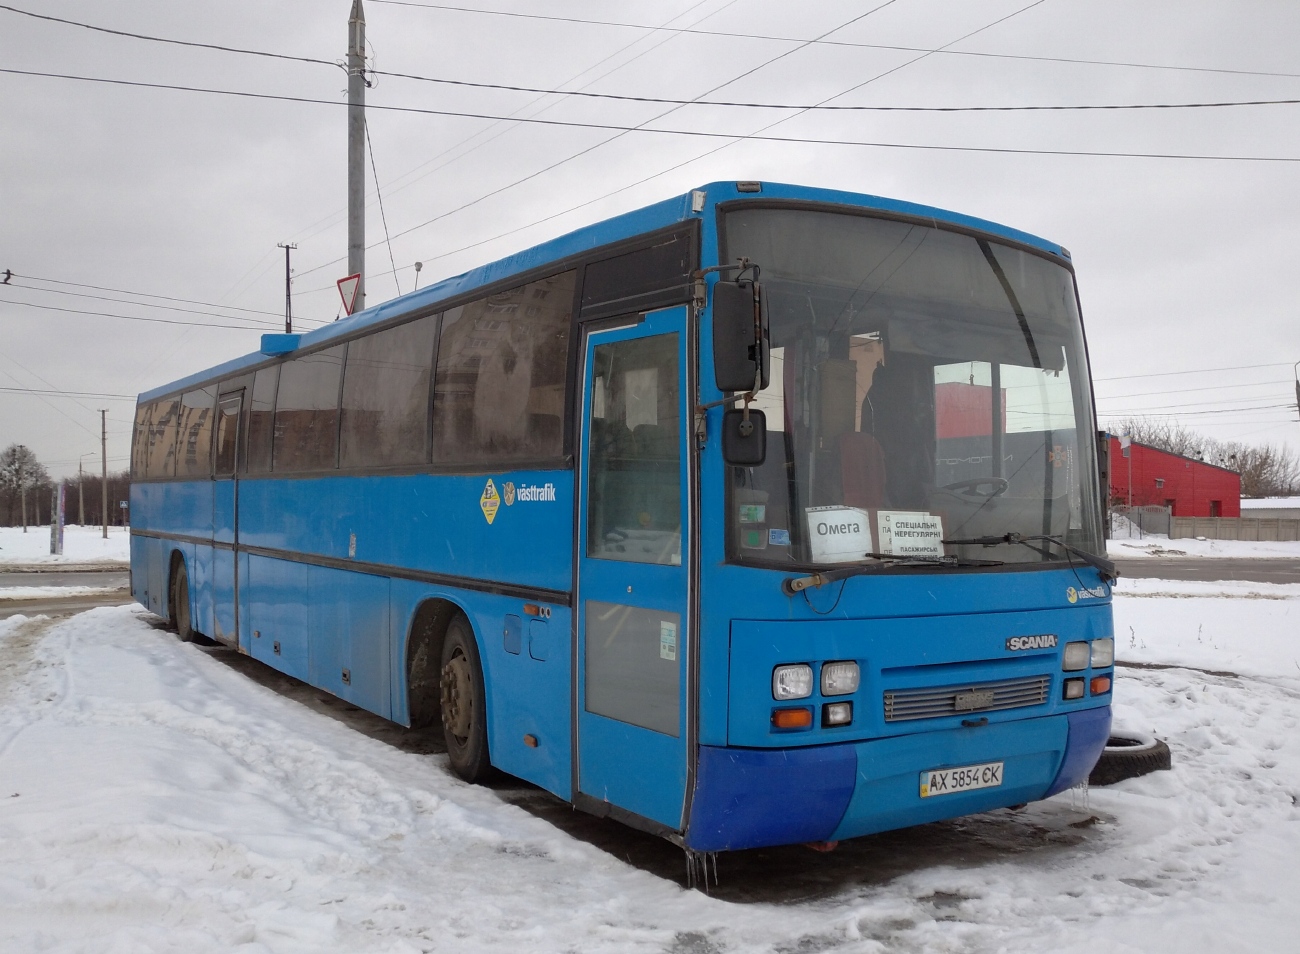 Kharkov region, Carrus Fifty № AX 5854 CK